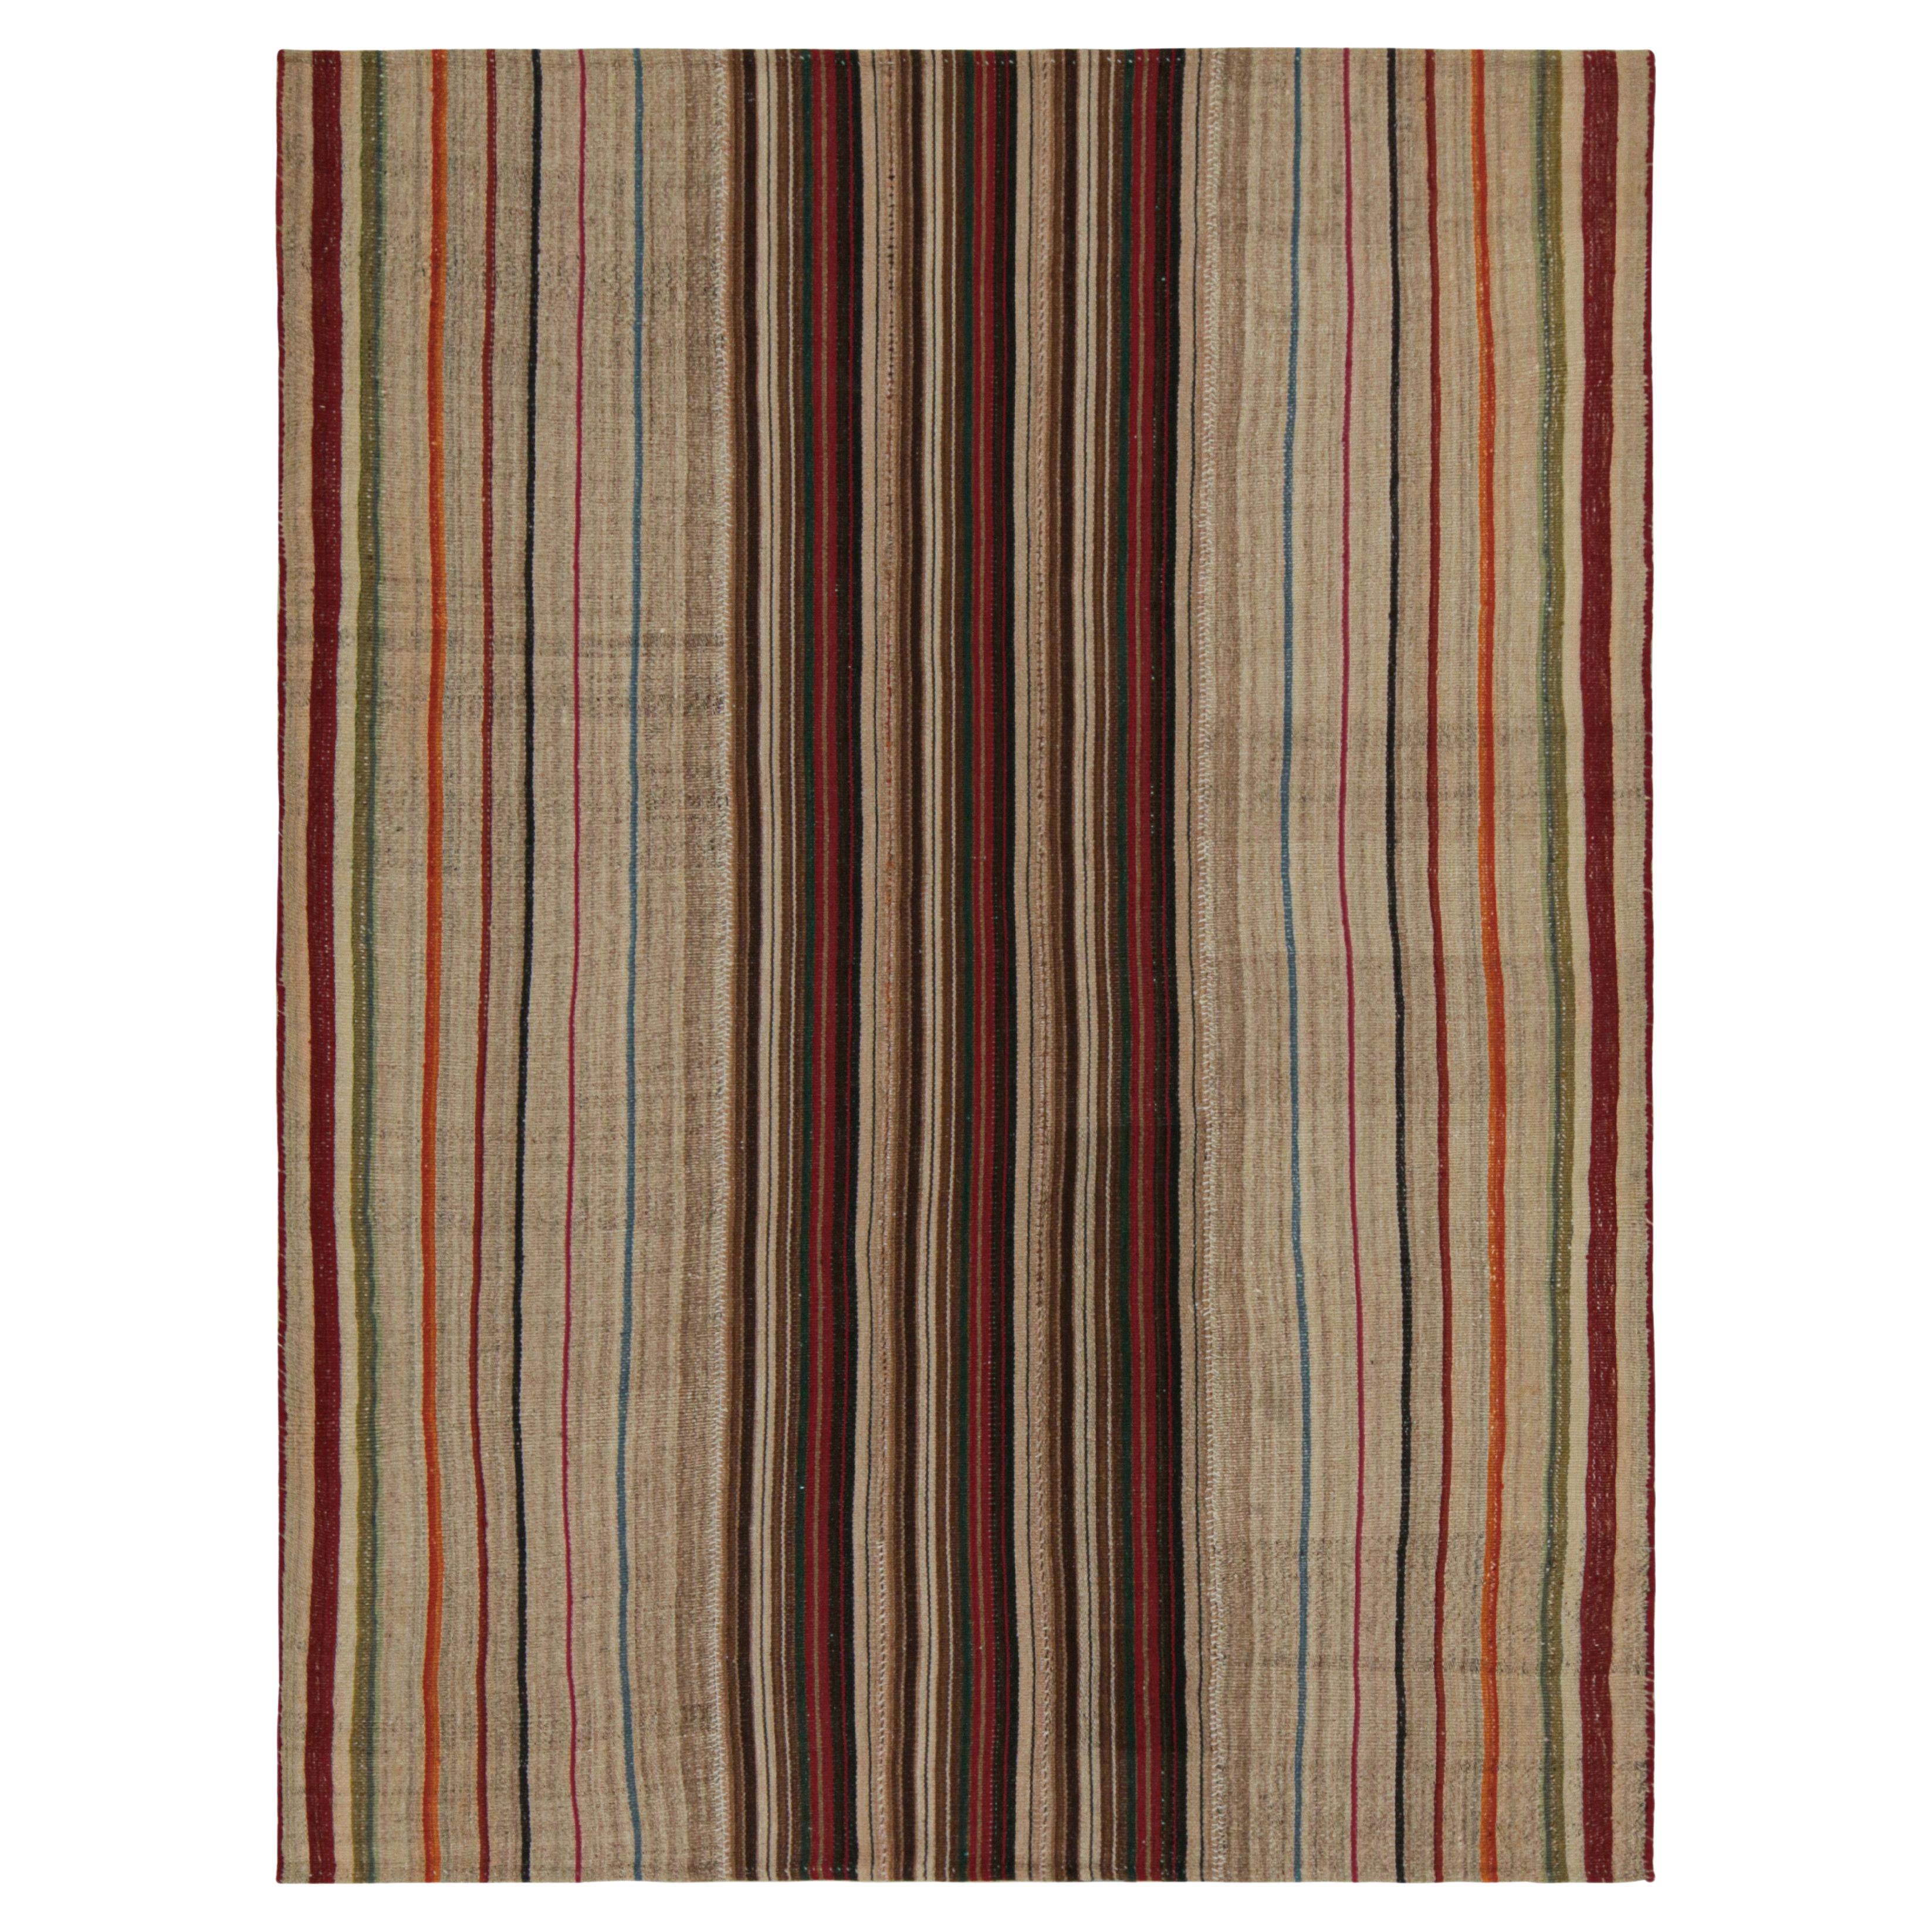 Vintage Persian Kilim in Beige-Brown Stripes in Panel Style